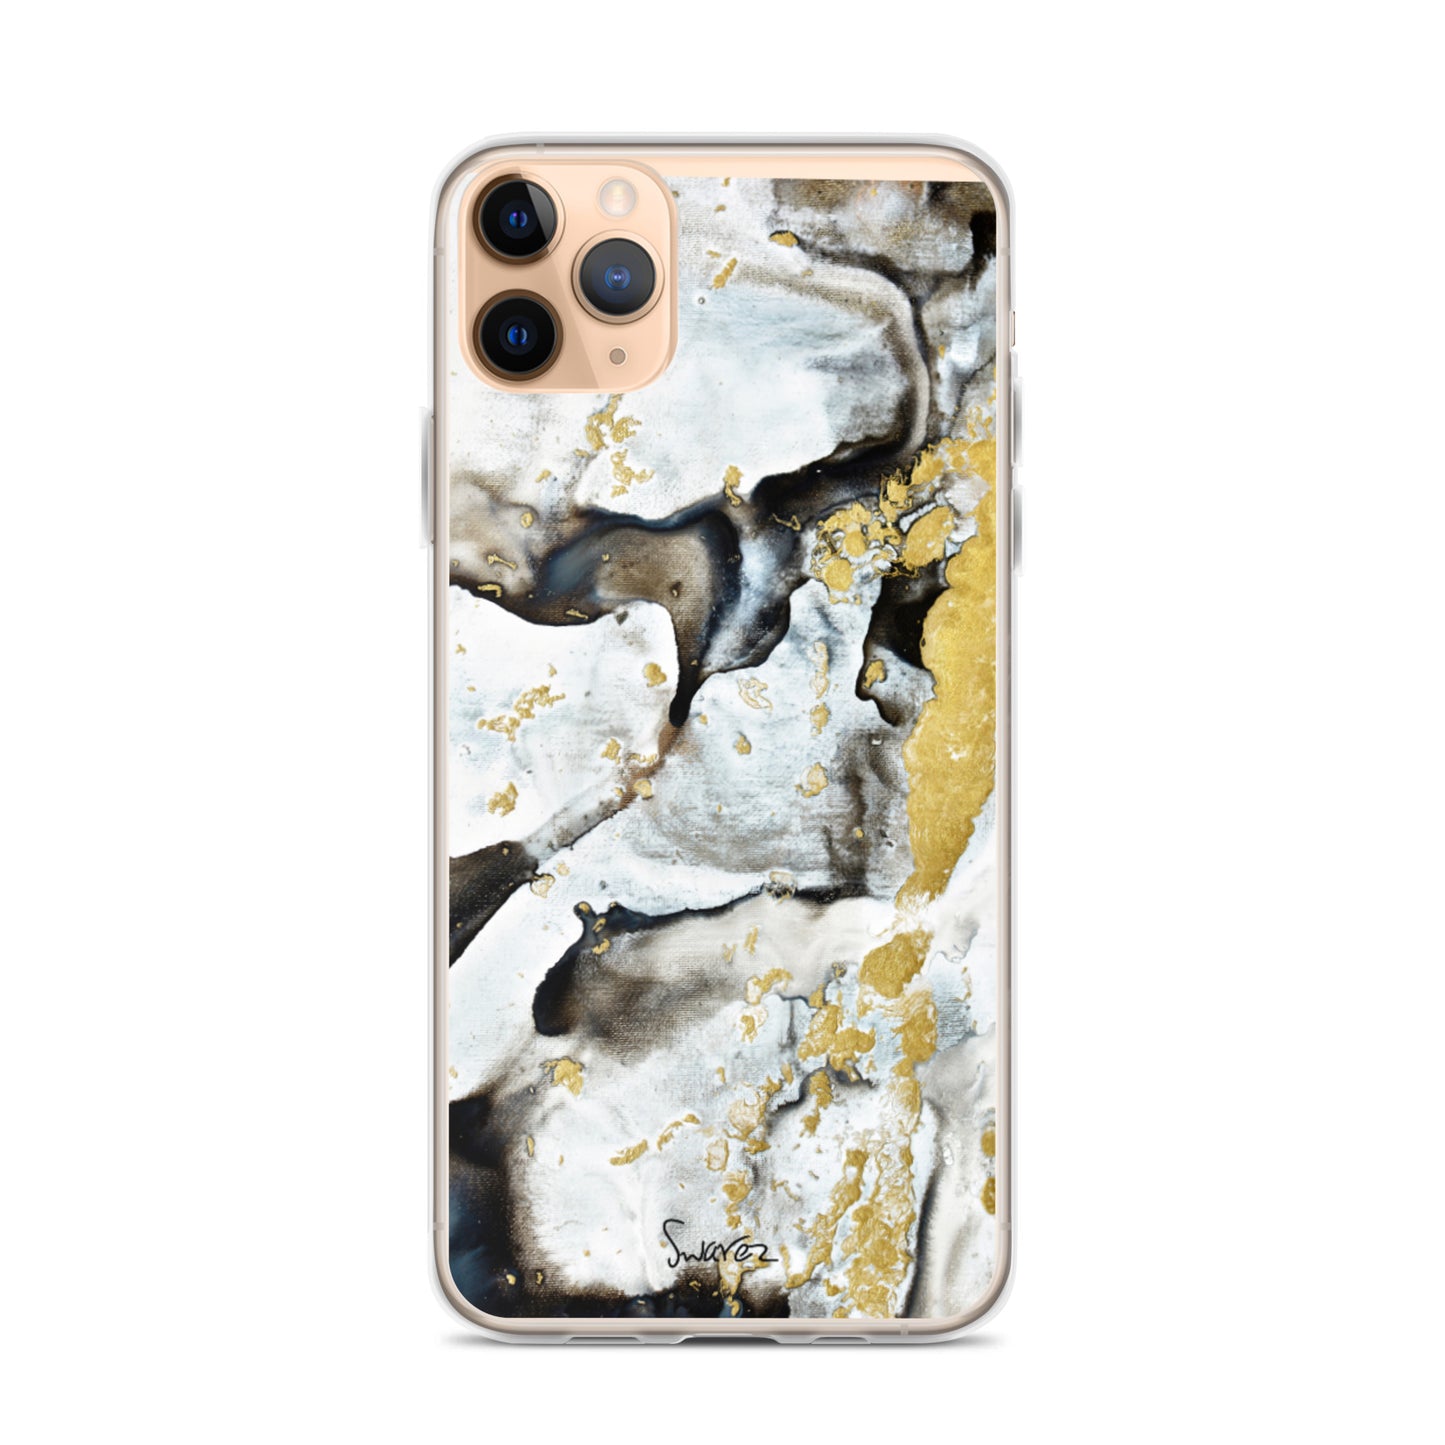 iPhone Case - Black and white design